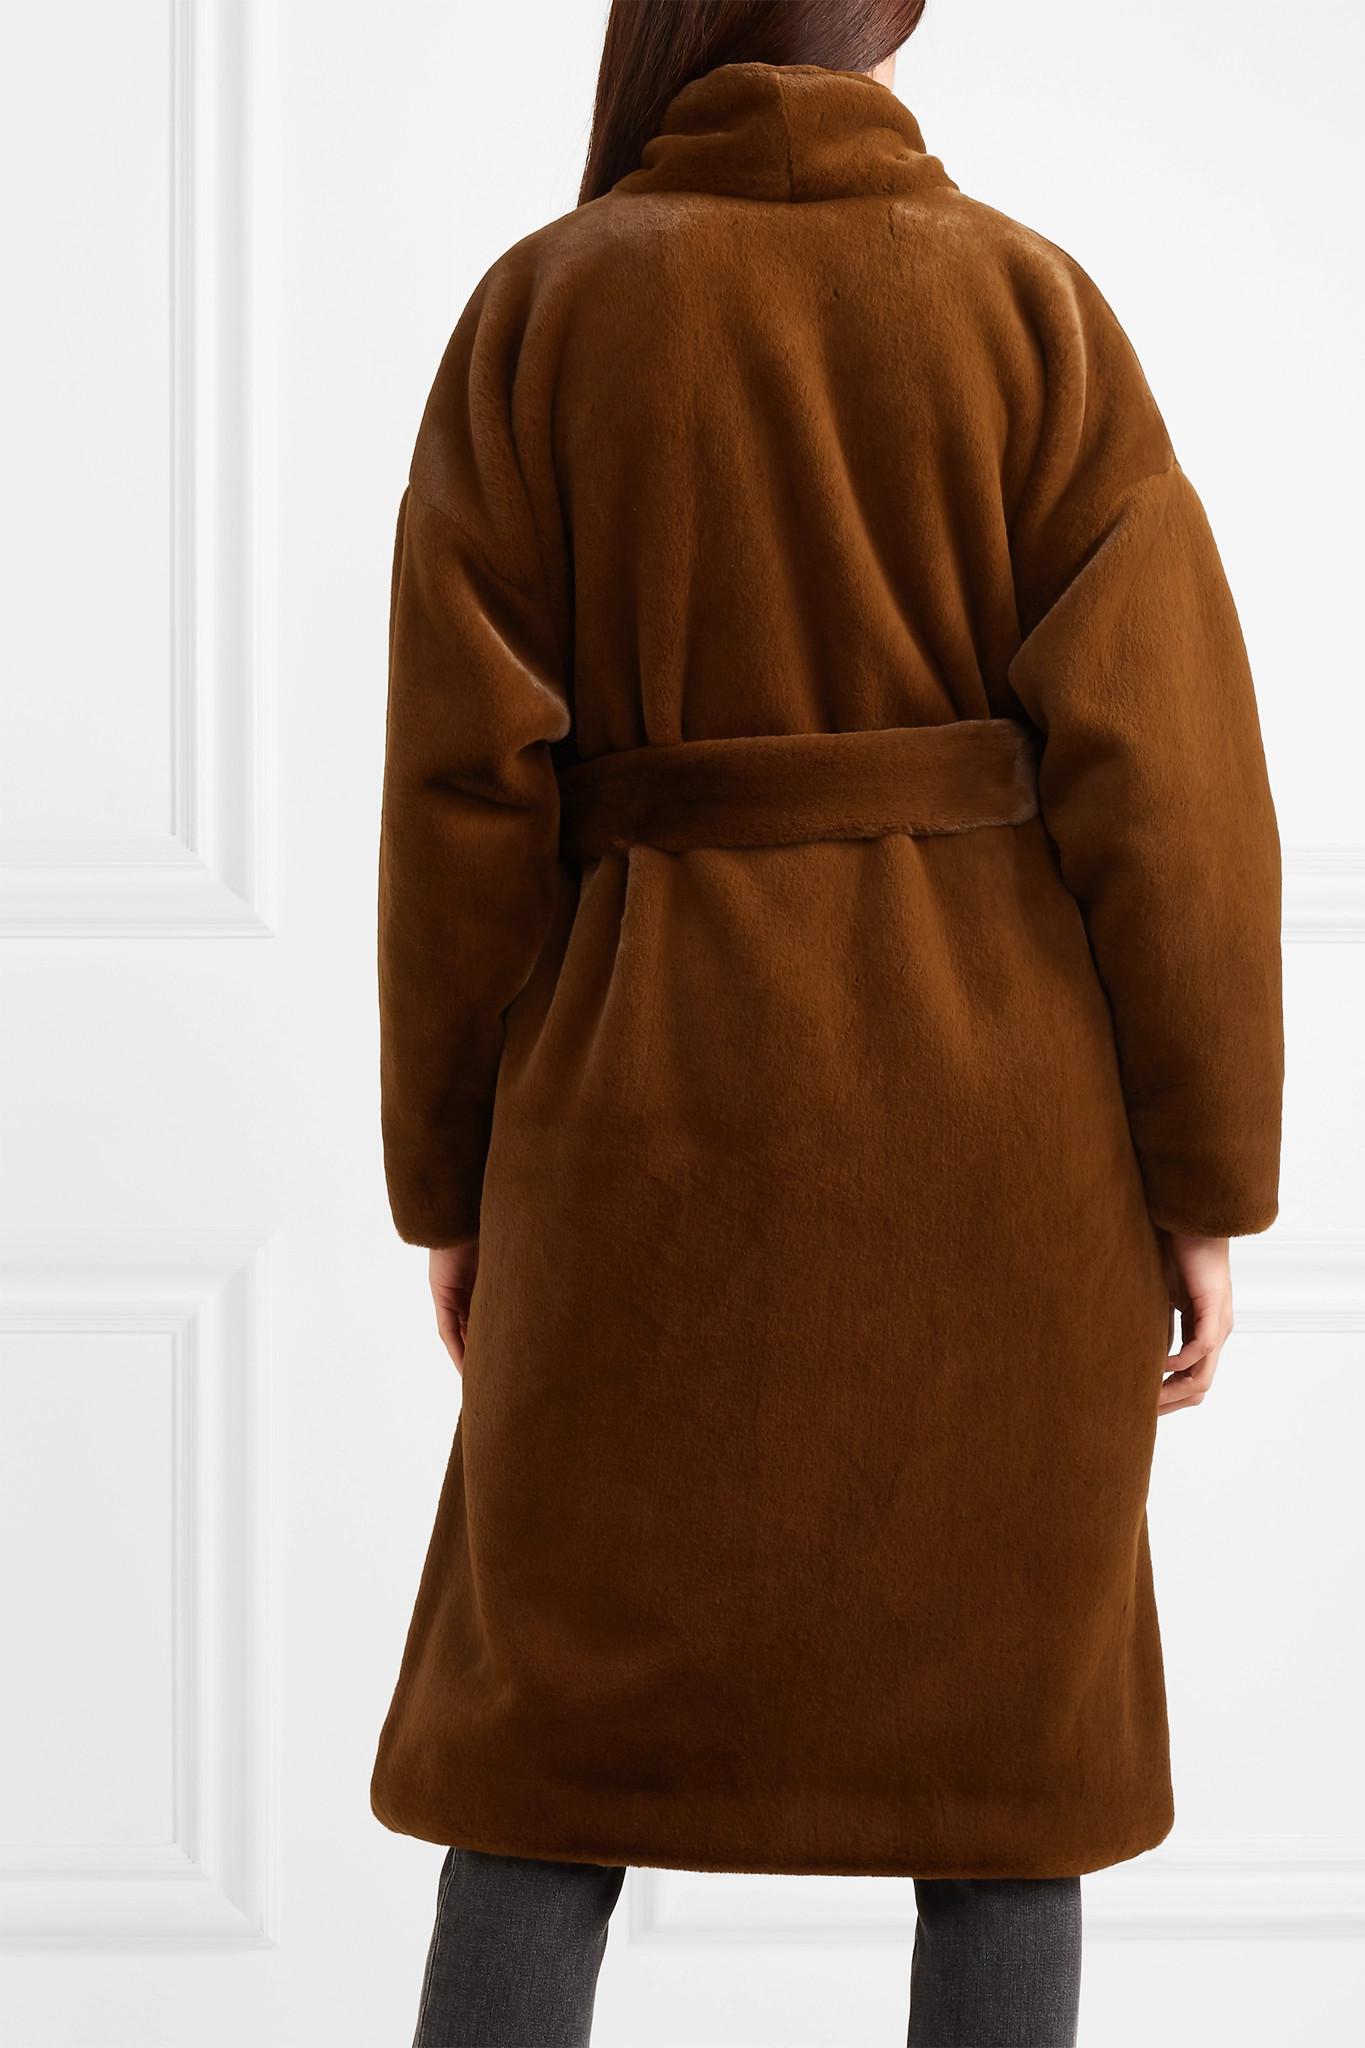 Totême Chelsea Belted Faux Fur Coat in Chocolate (Brown) - Lyst